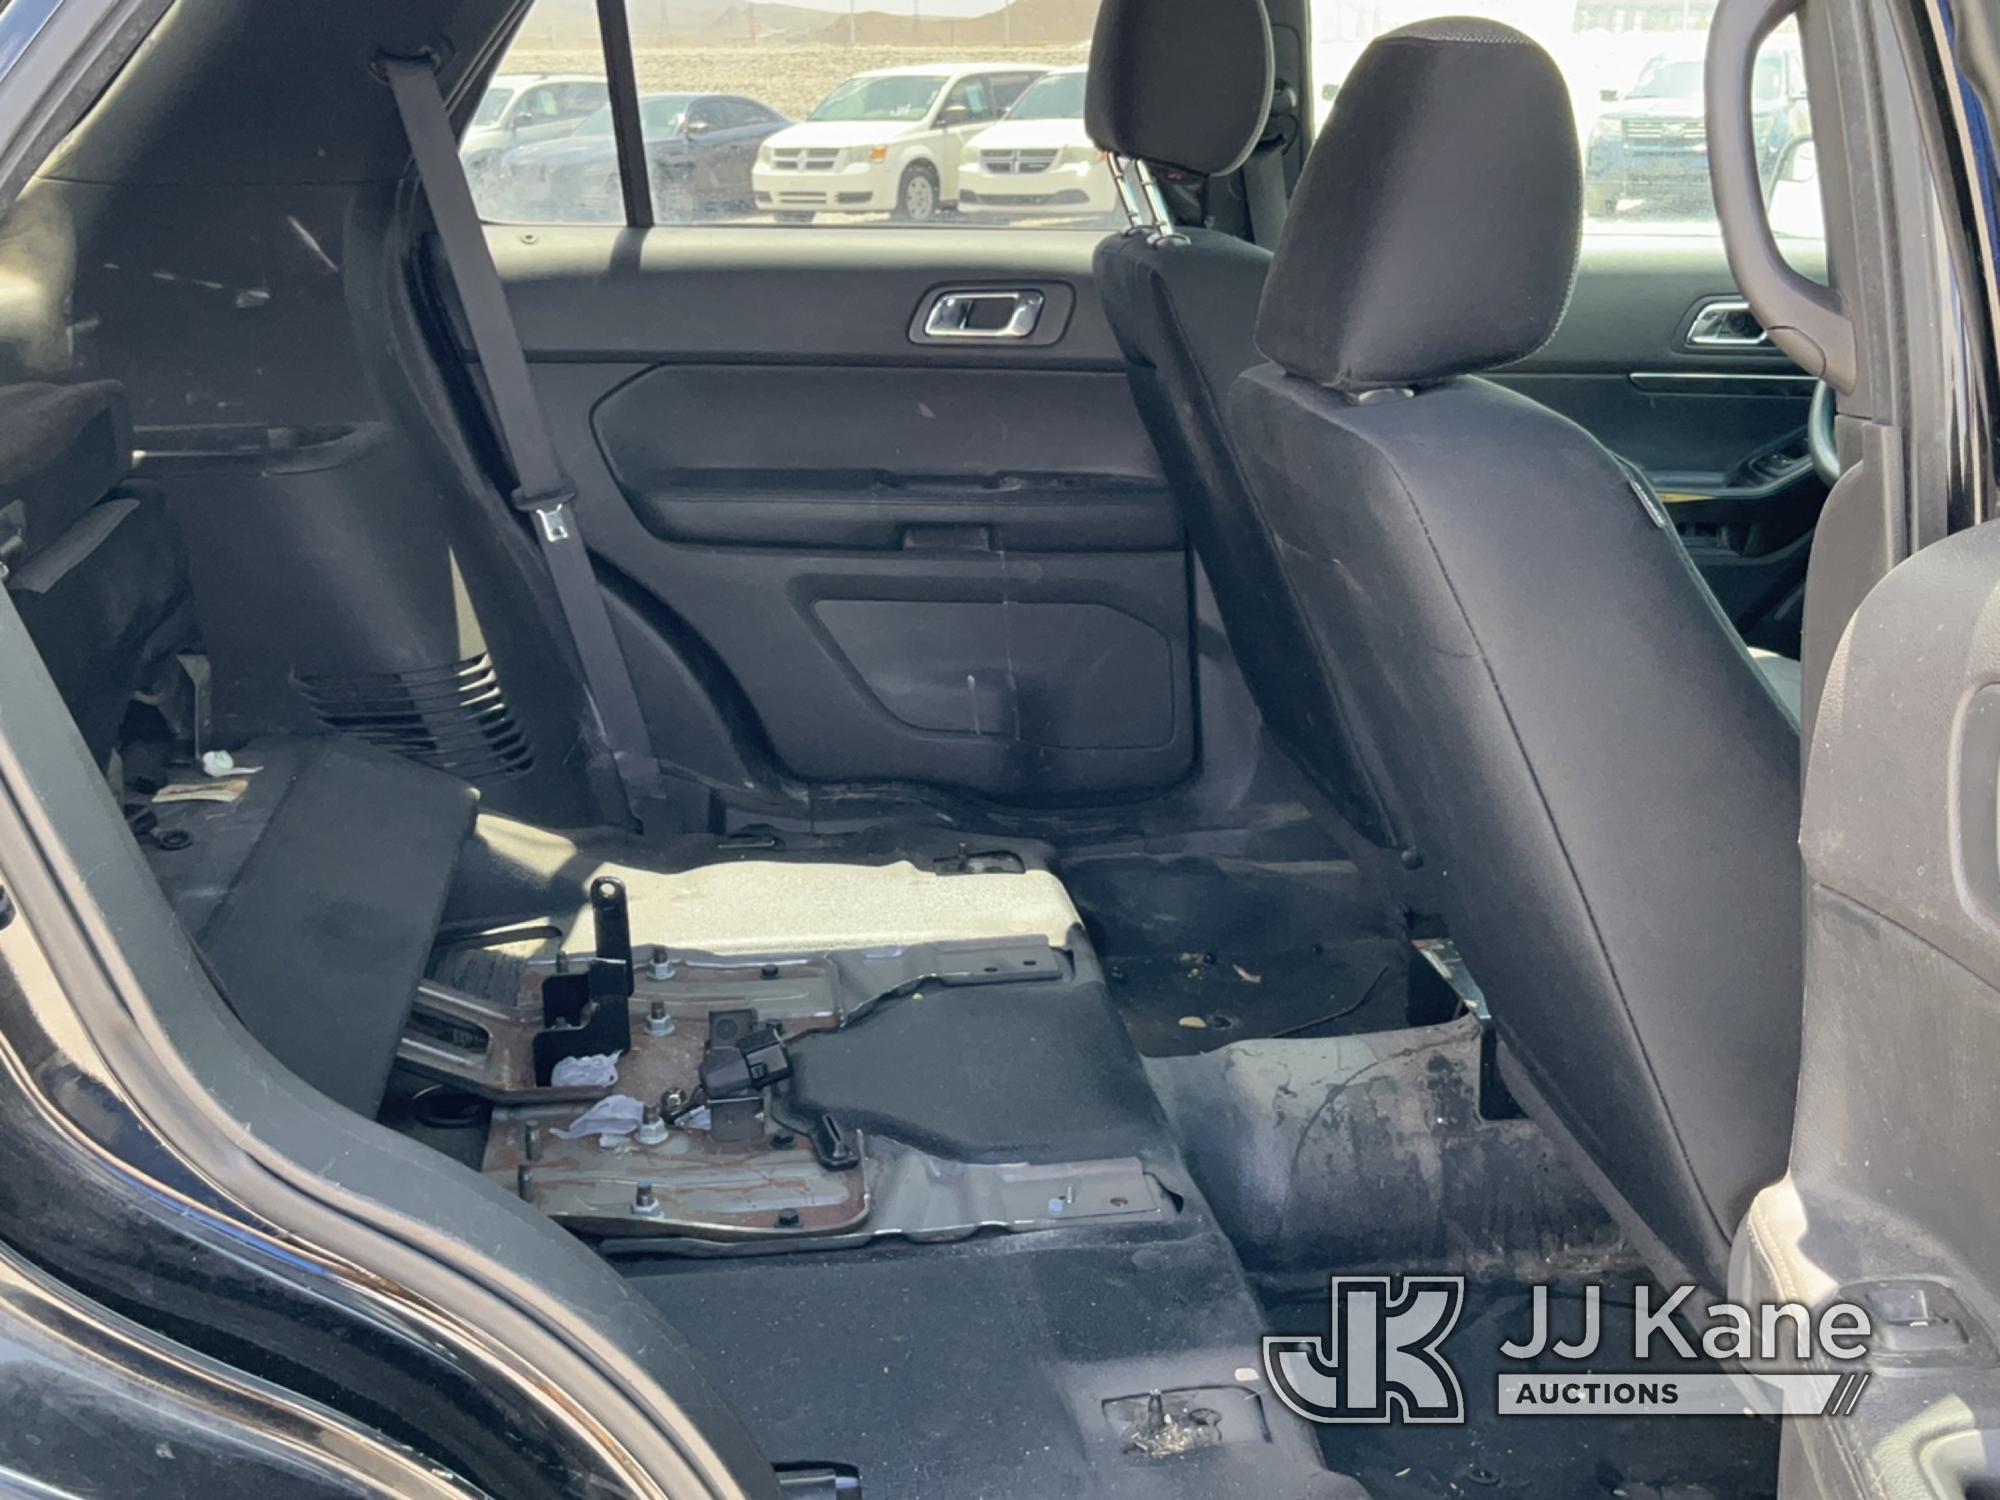 (Las Vegas, NV) 2013 Ford Explorer AWD Police Interceptor Interior Damage, Rear Seats Unsecured, No